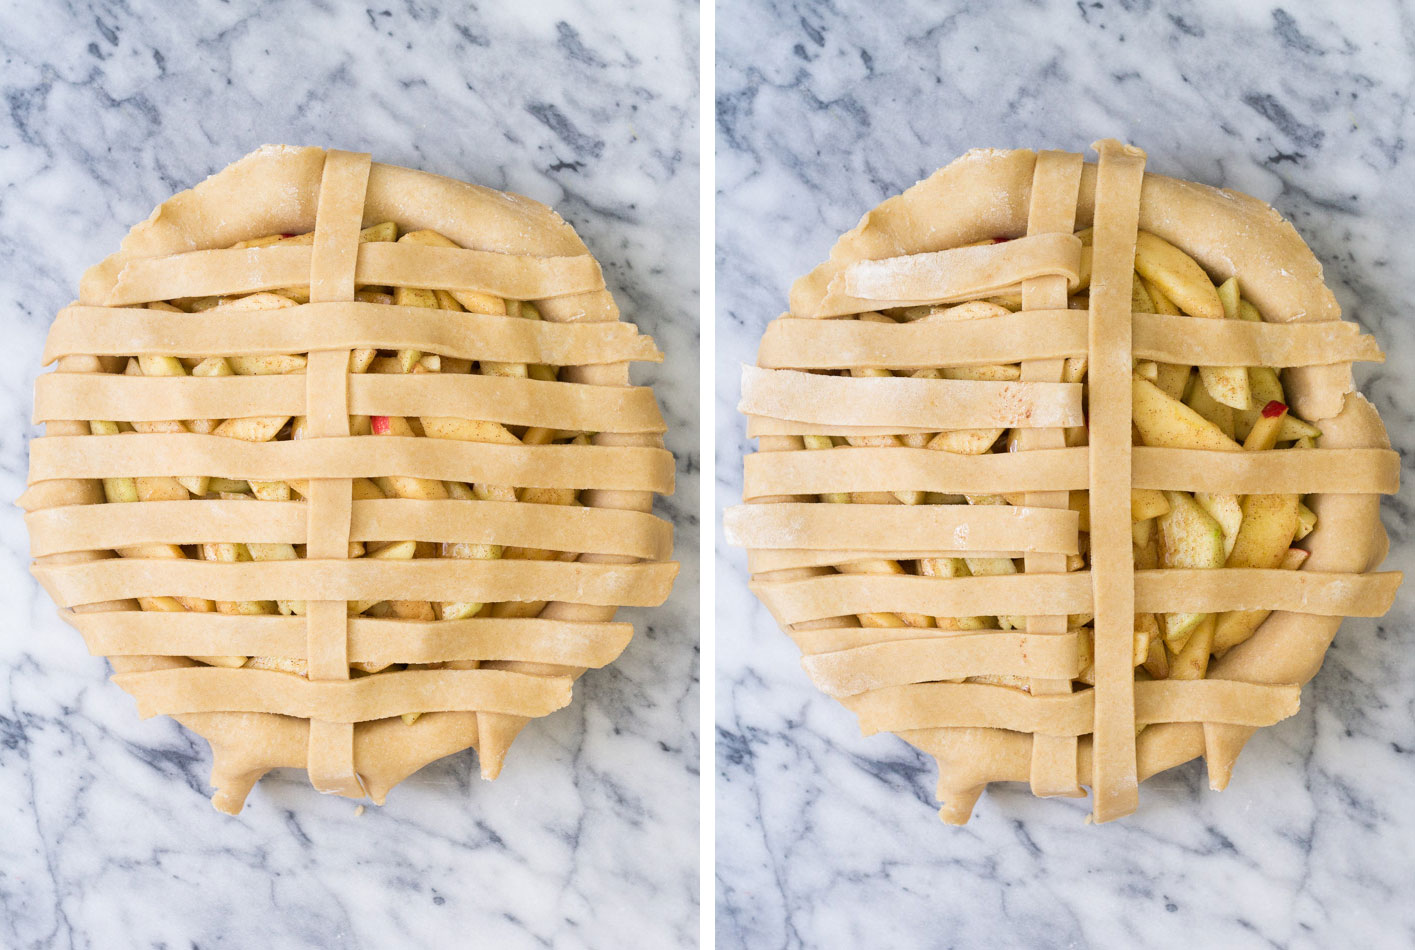 Weaving more strips of dough into a lattice pie crust.